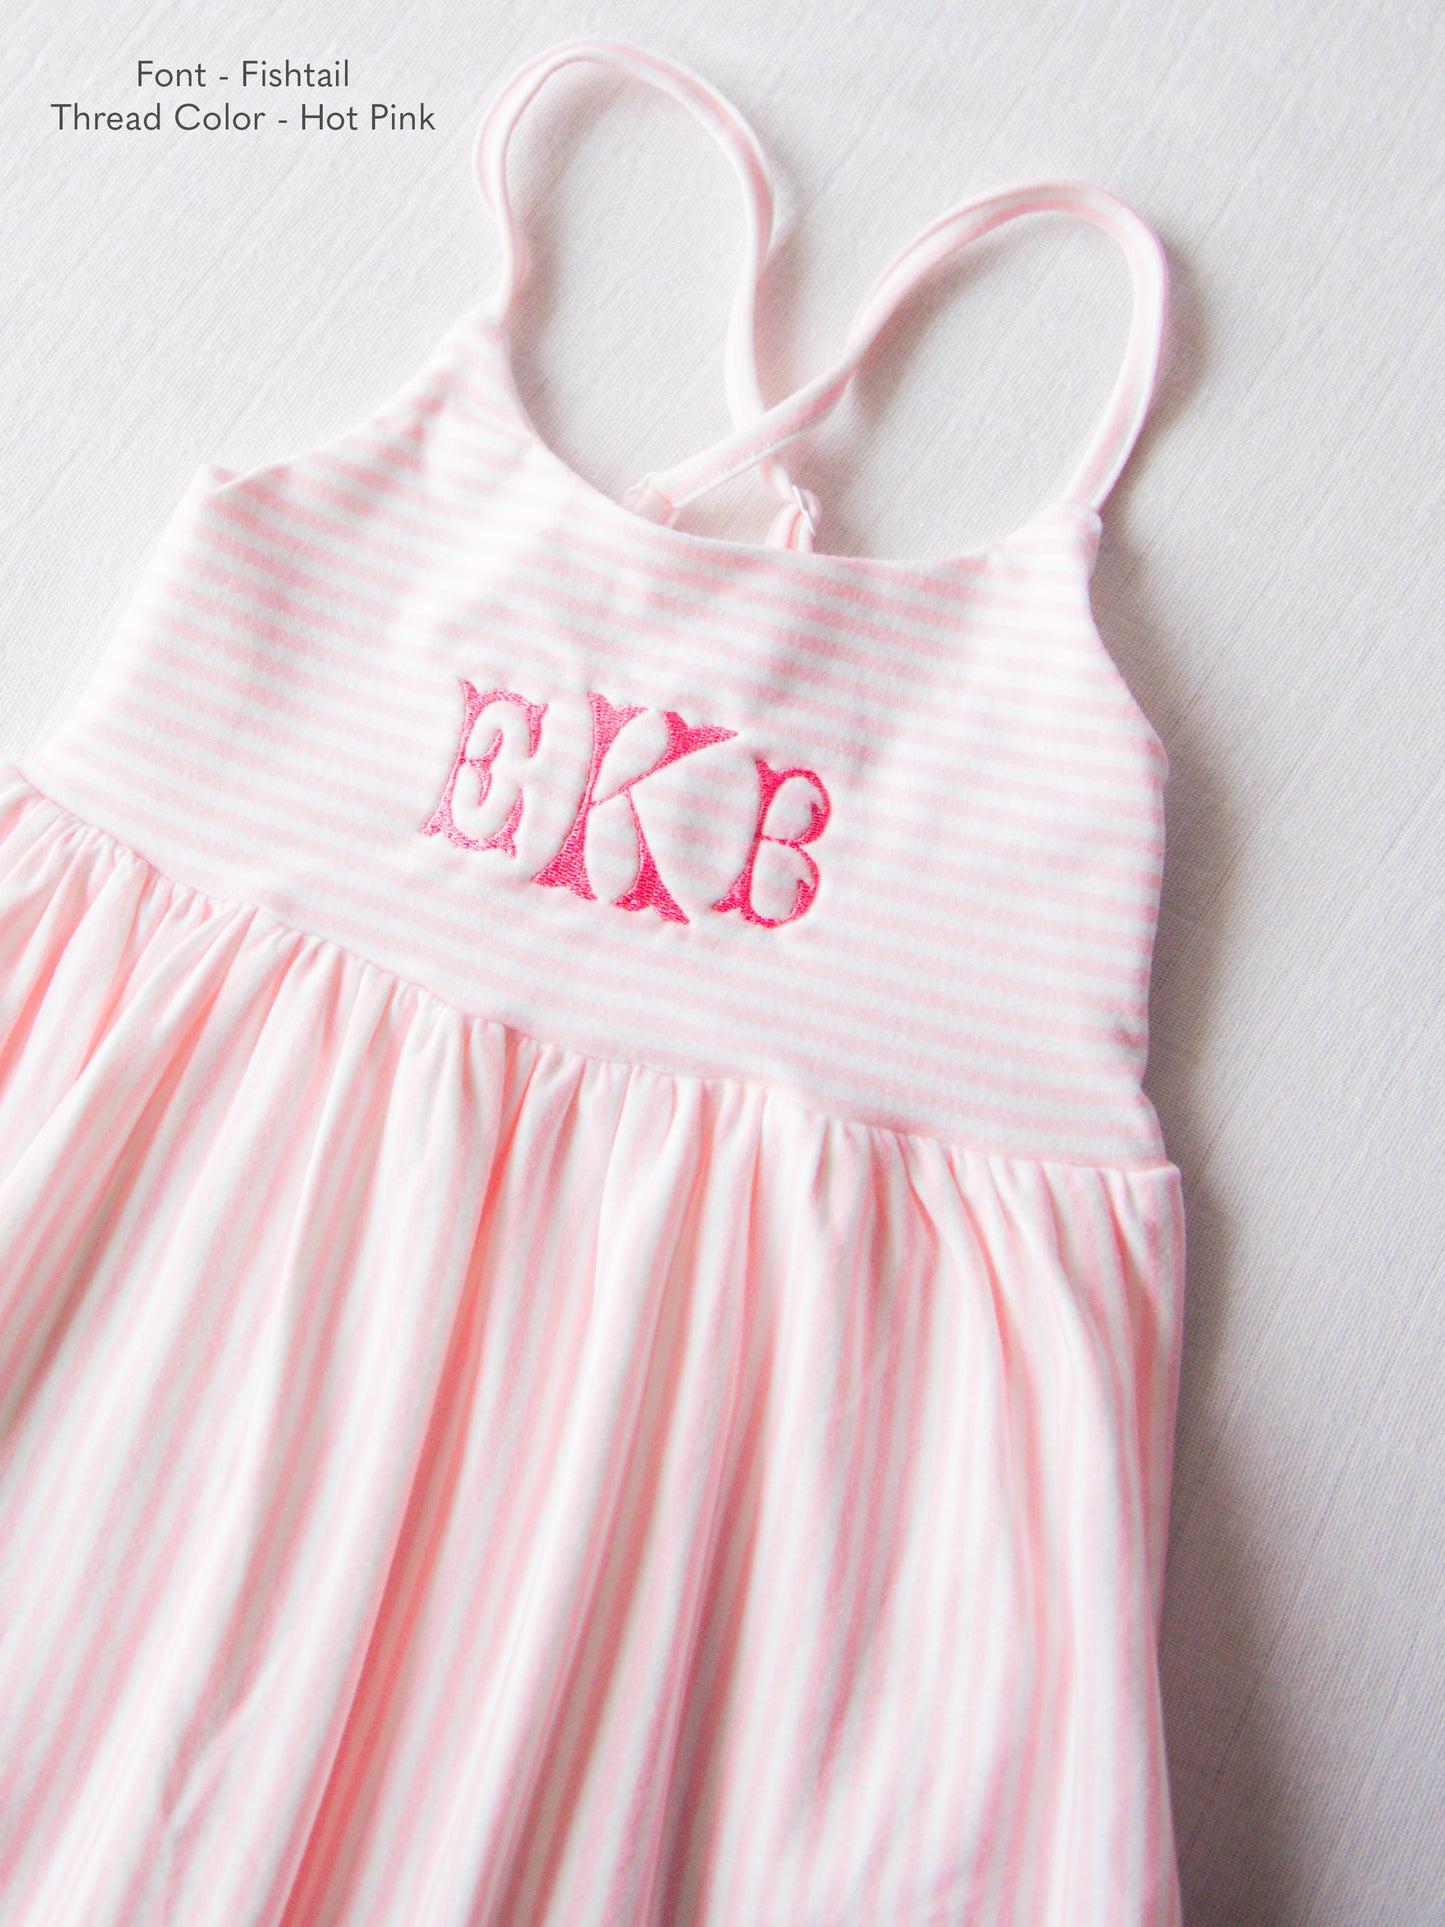 Maxi Play Dress - Little Pink Stripes